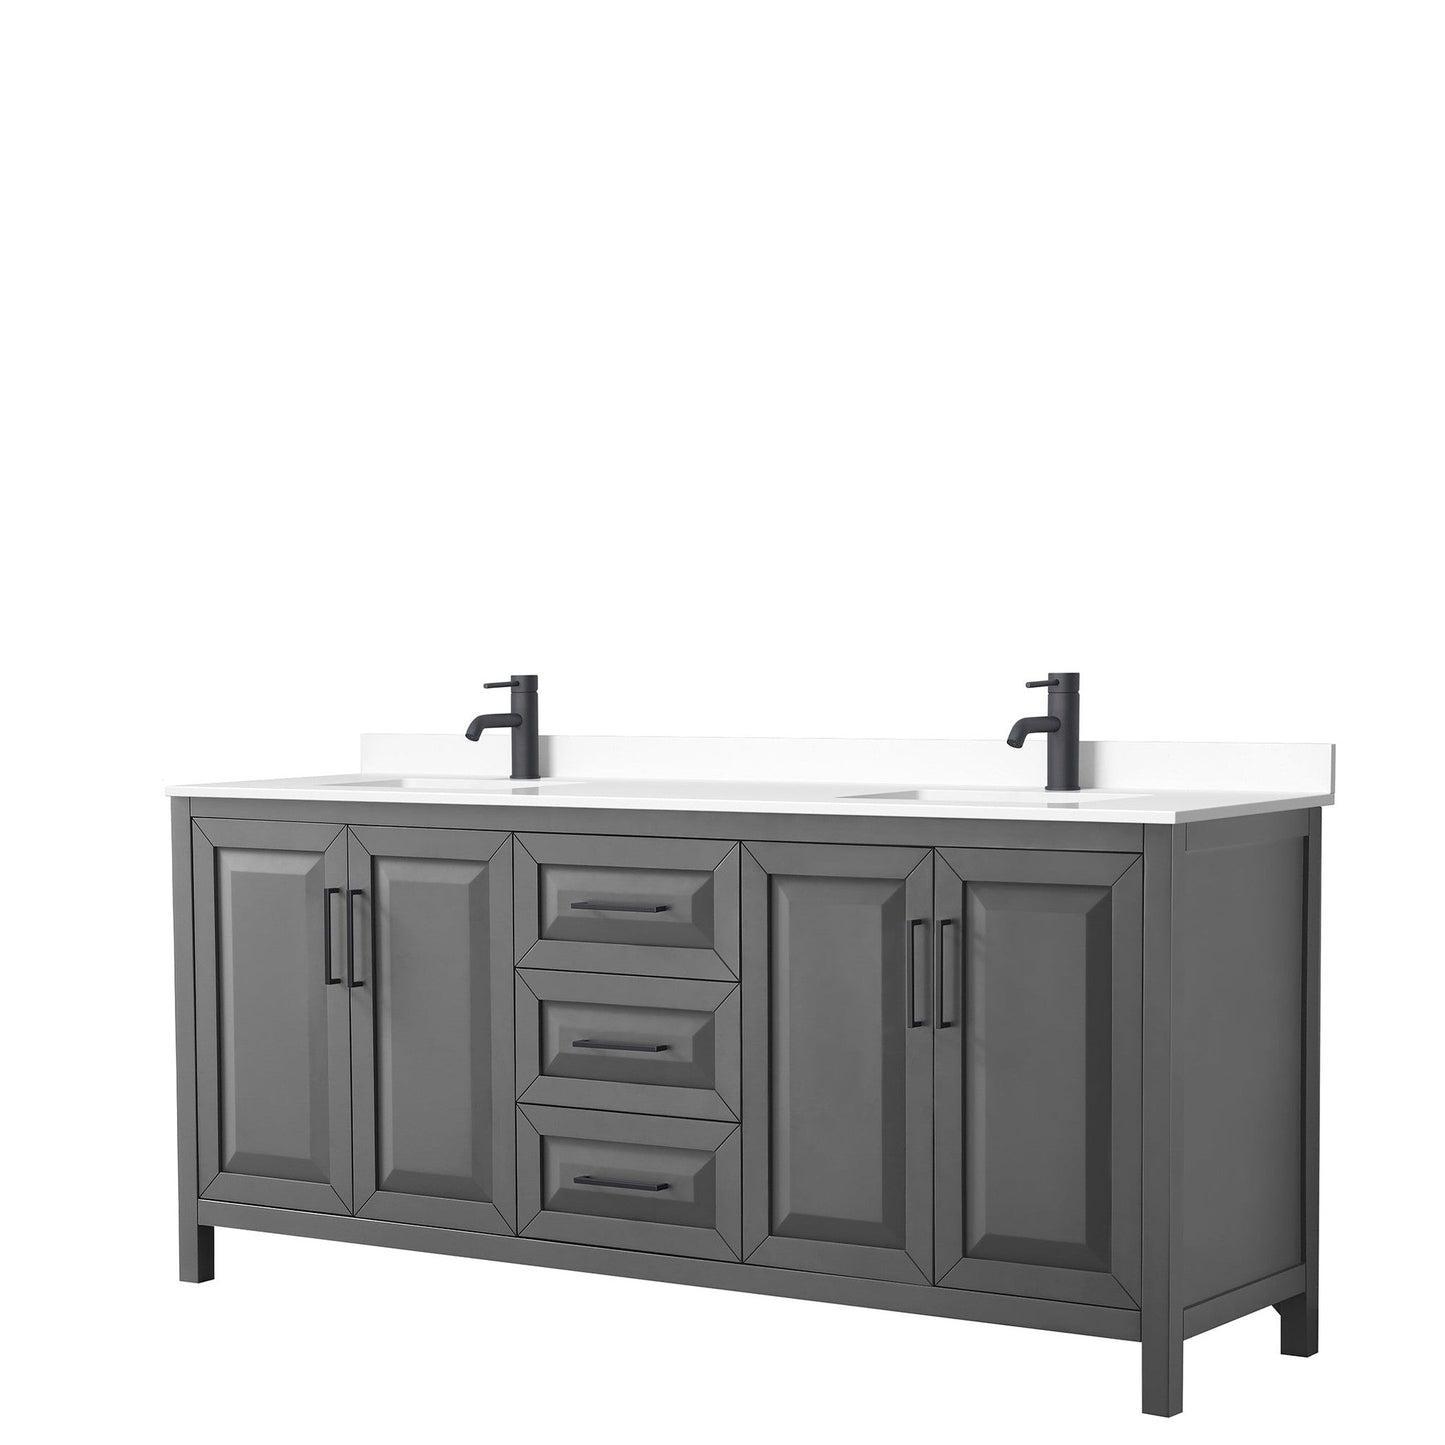 Daria 80" Double Bathroom Vanity in Dark Gray, White Cultured Marble Countertop, Undermount Square Sinks, Matte Black Trim